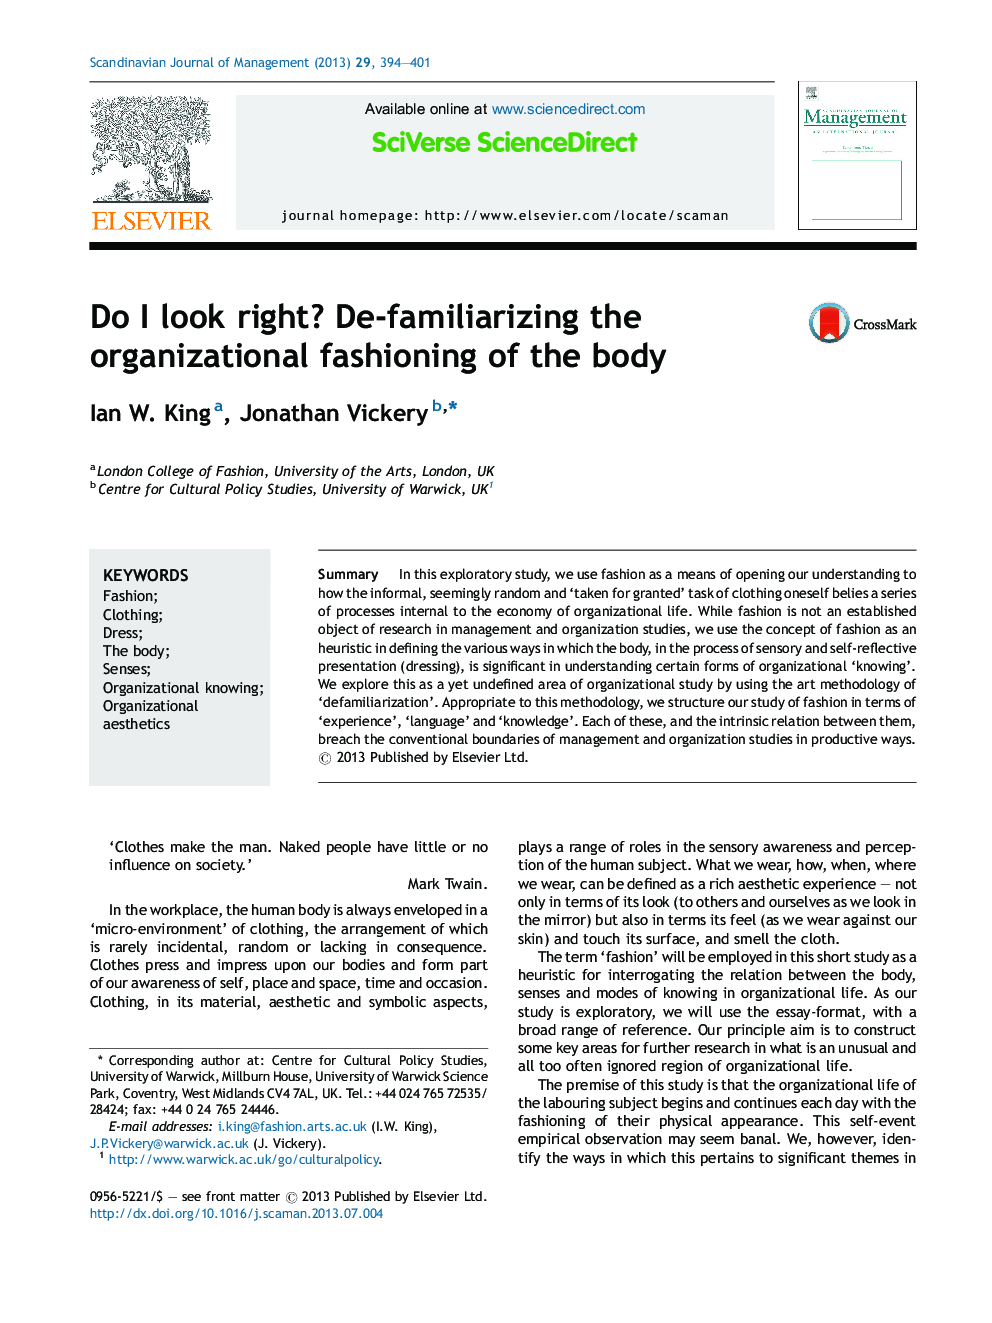 Do I look right? De-familiarizing the organizational fashioning of the body